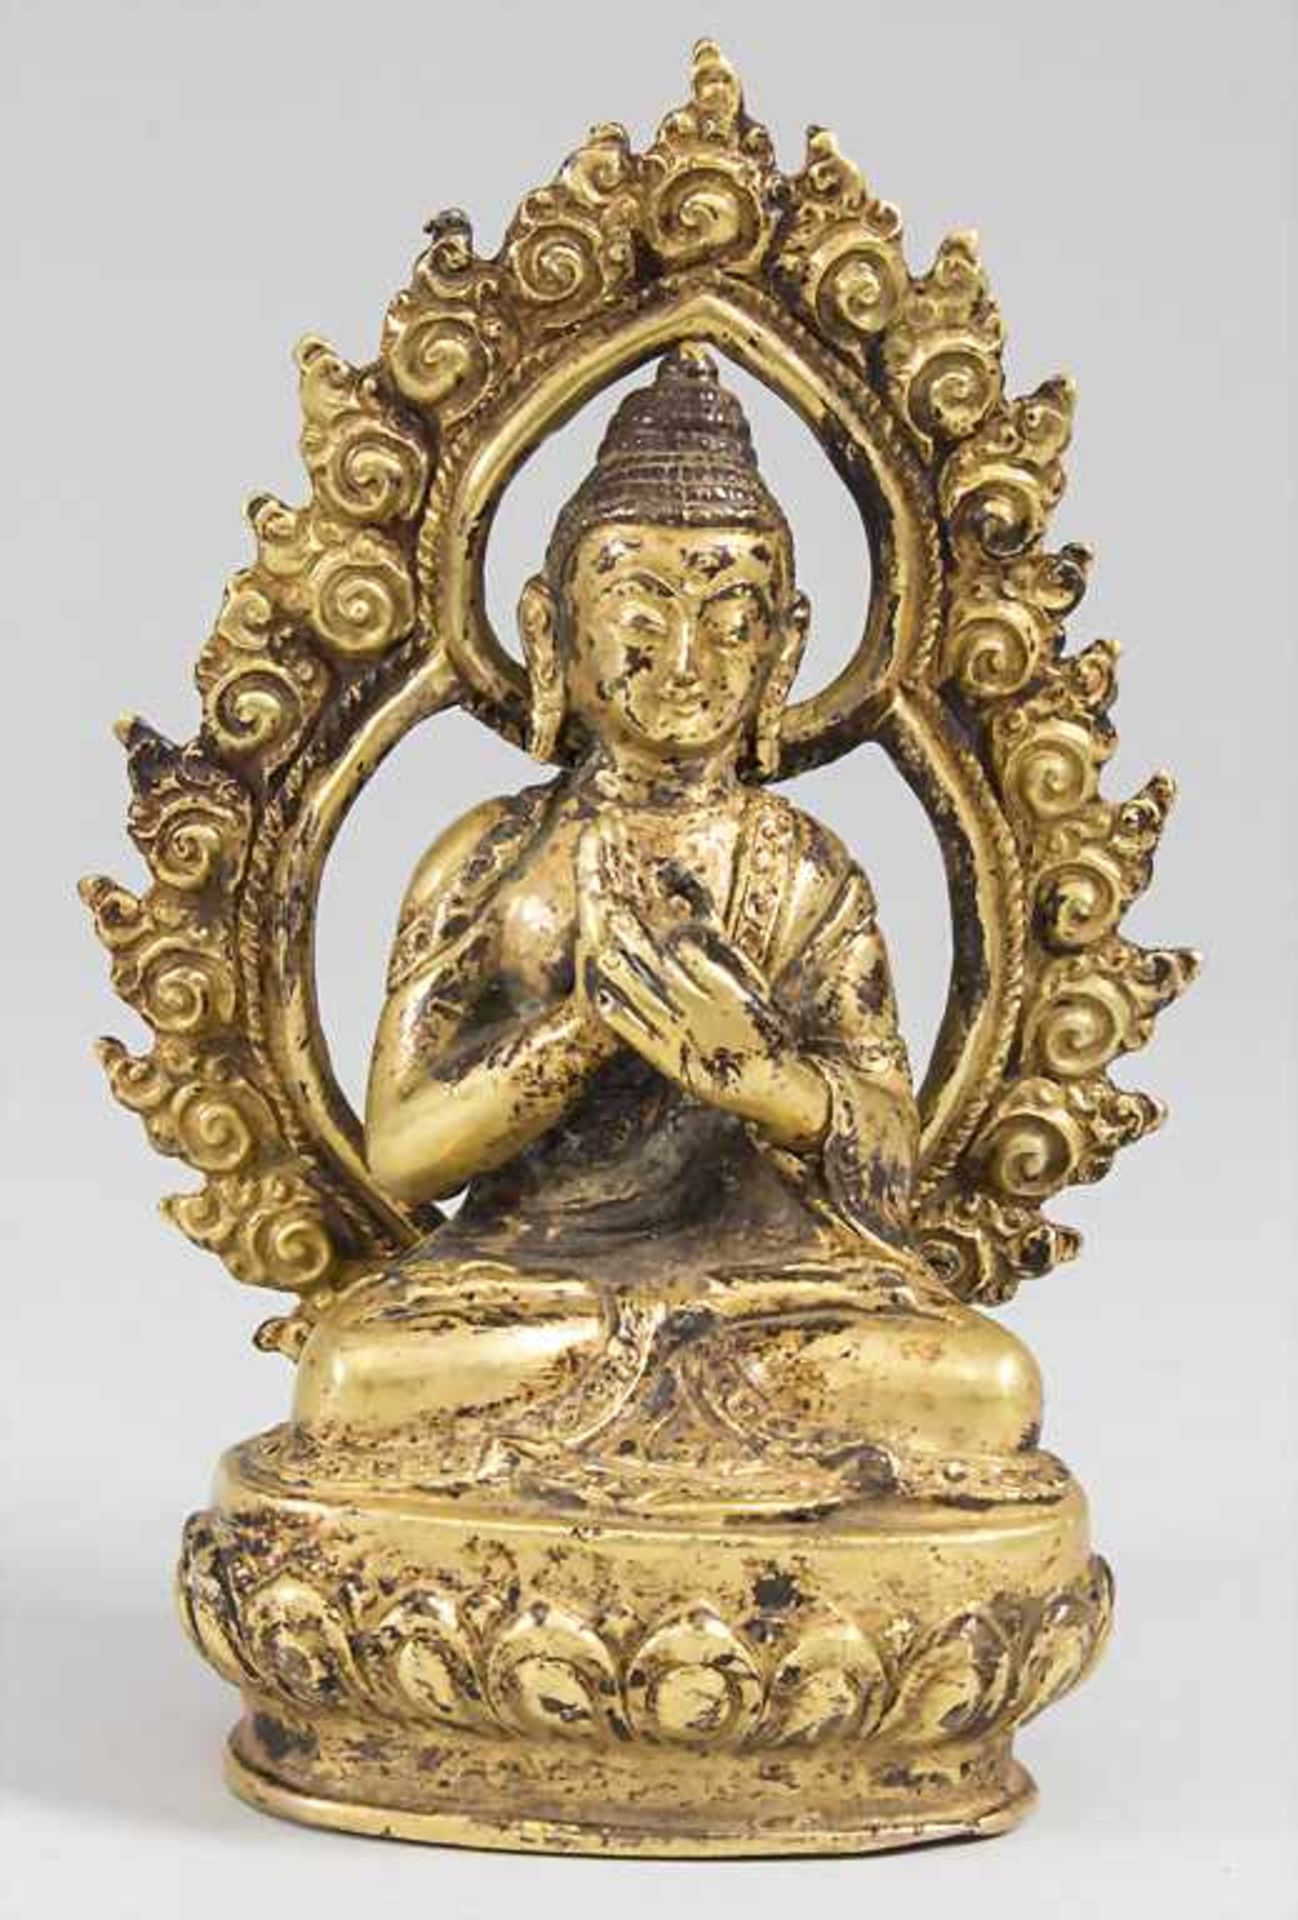 Lehrender Buddha 'Shakyamuni', Tibet, 16./17. Jh.